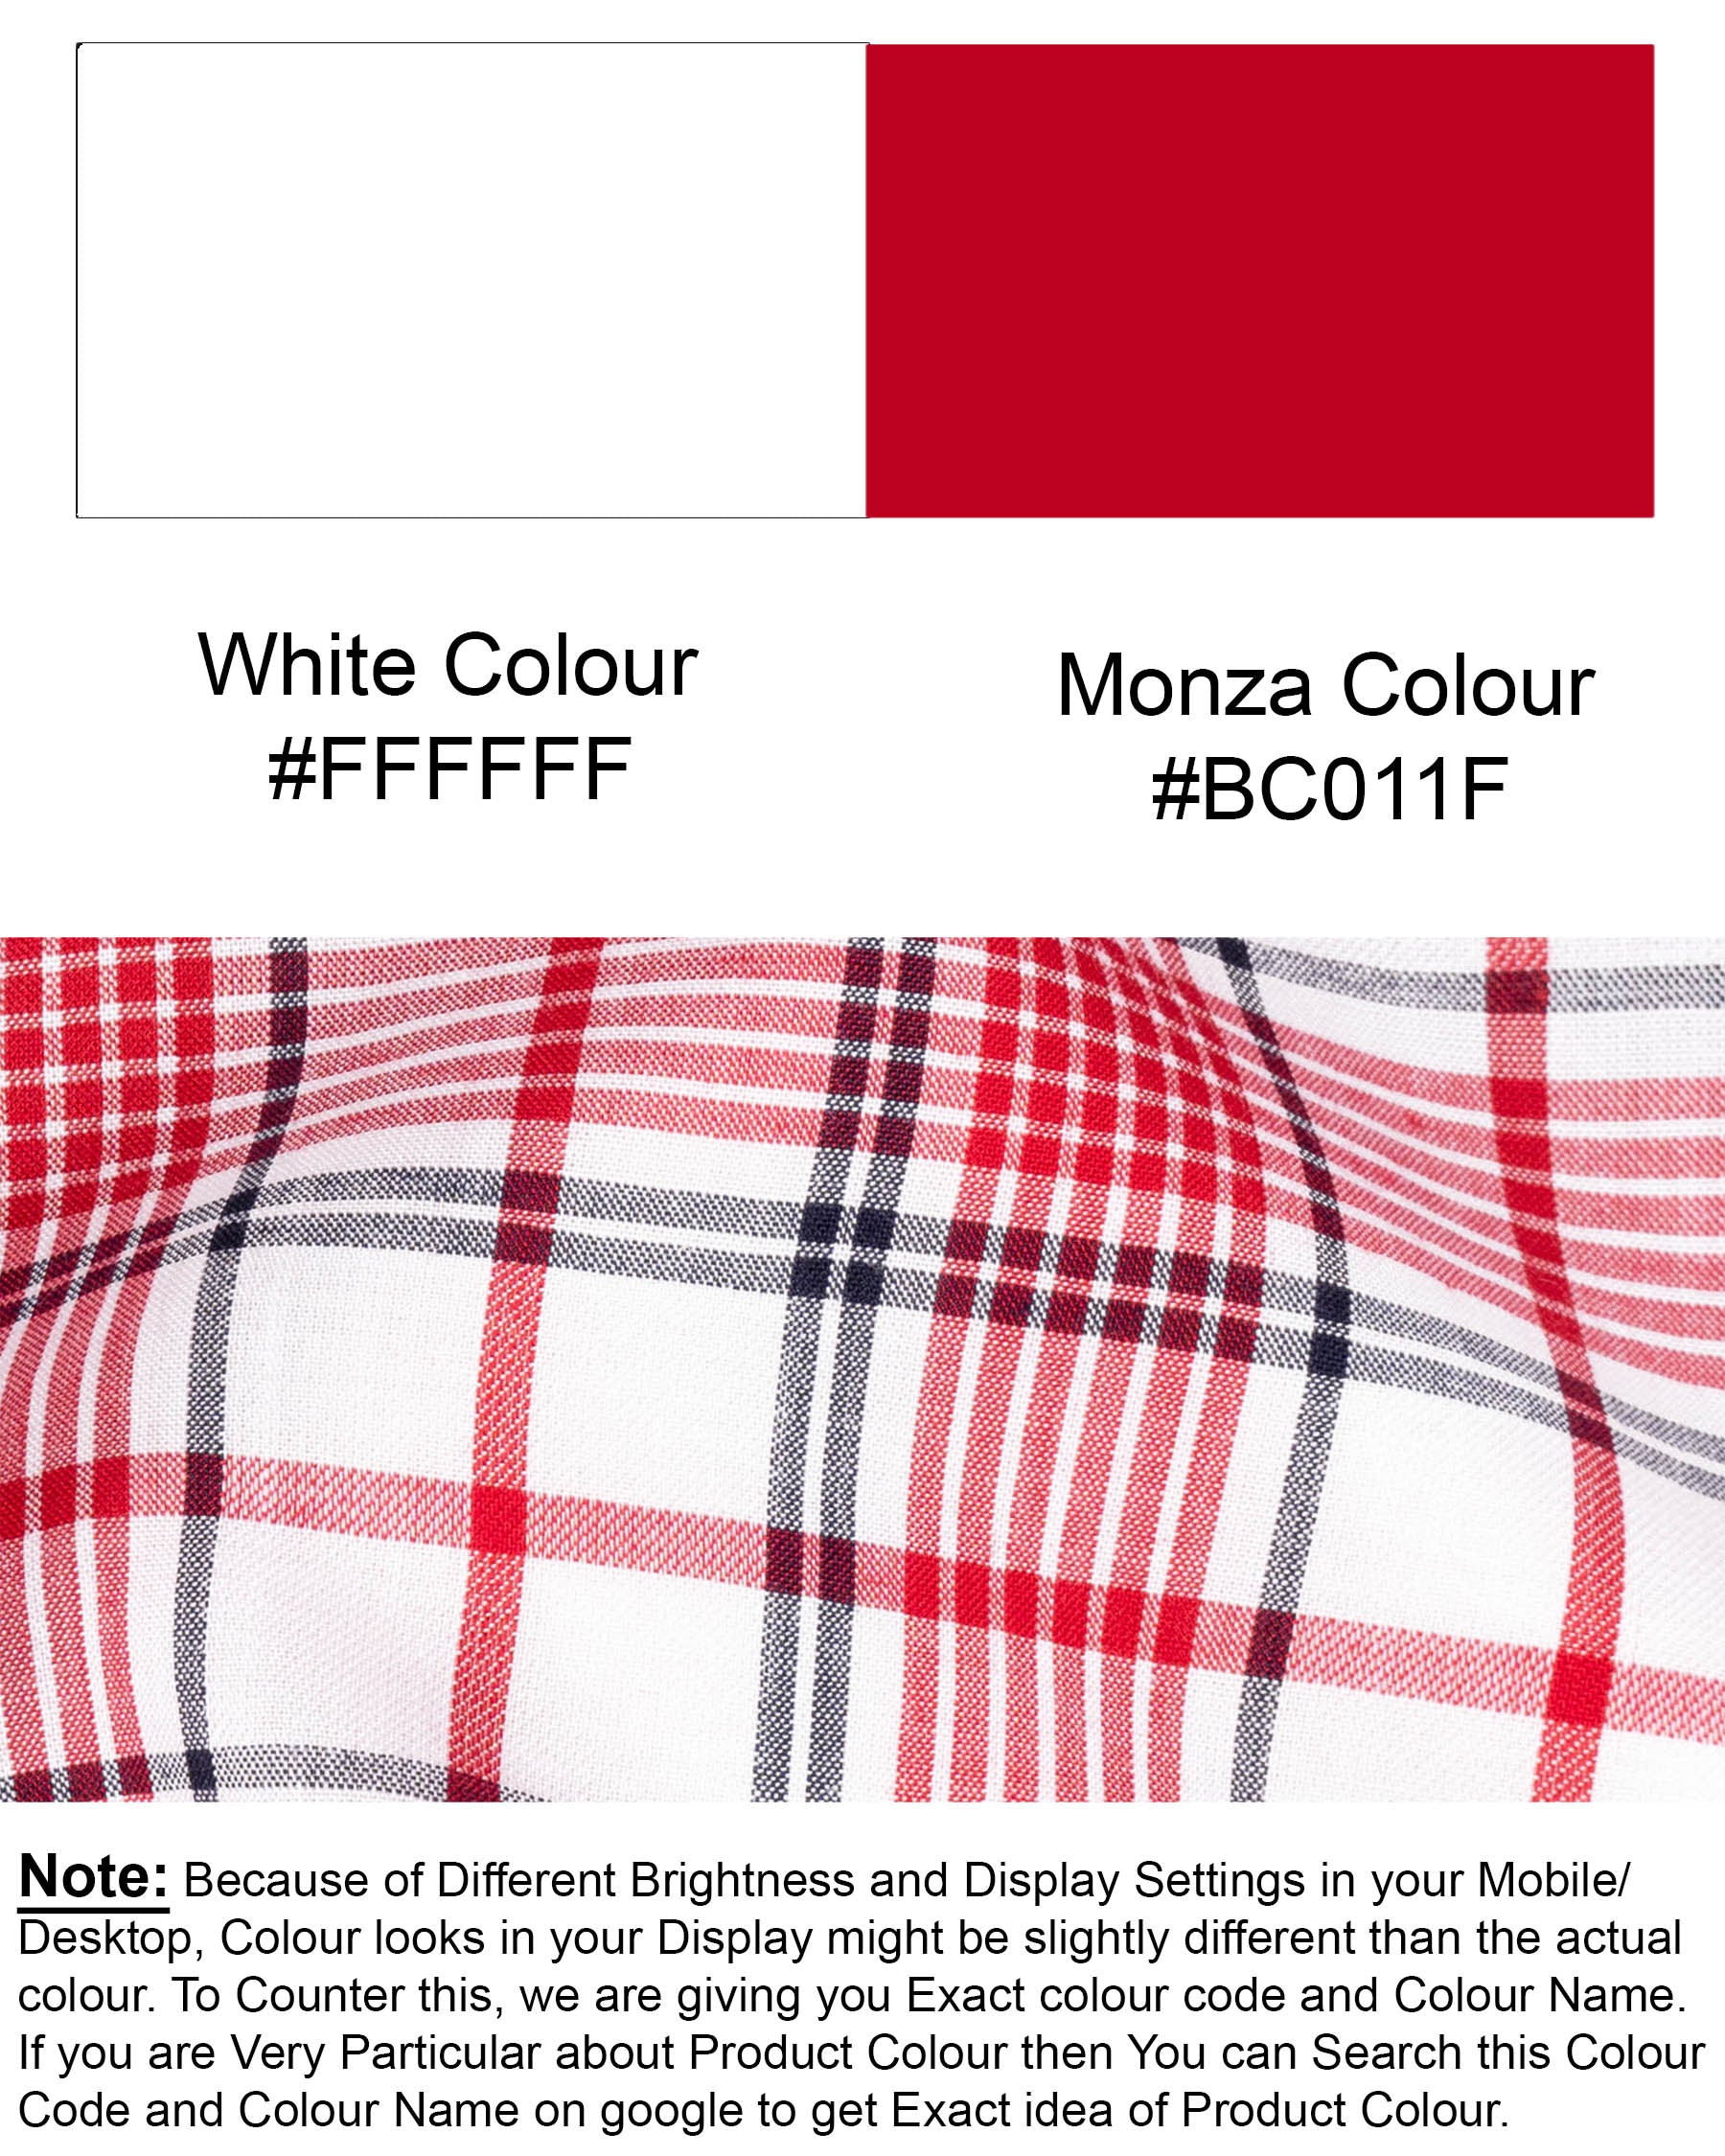 White and Monza Red Plaid Premium Cotton Shirt 6218-BD-BLK-38, 6218-BD-BLK-H-38, 6218-BD-BLK-39, 6218-BD-BLK-H-39, 6218-BD-BLK-40, 6218-BD-BLK-H-40, 6218-BD-BLK-42, 6218-BD-BLK-H-42, 6218-BD-BLK-44, 6218-BD-BLK-H-44, 6218-BD-BLK-46, 6218-BD-BLK-H-46, 6218-BD-BLK-48, 6218-BD-BLK-H-48, 6218-BD-BLK-50, 6218-BD-BLK-H-50, 6218-BD-BLK-52, 6218-BD-BLK-H-52